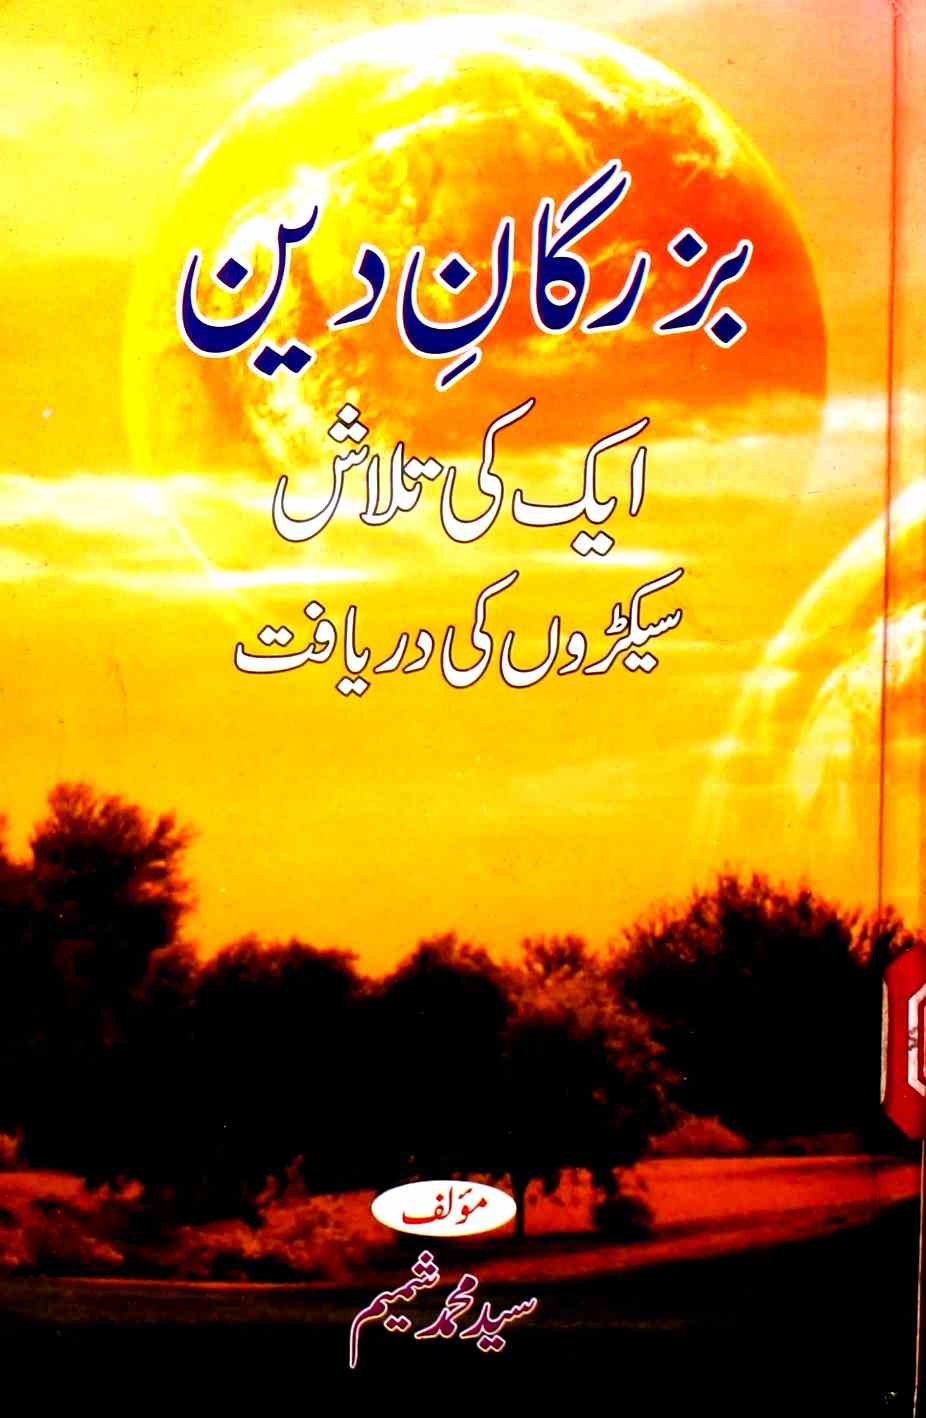 Buzurgan-e-Deen, Ek Ki Talash, Saikrhon Ki Daryat